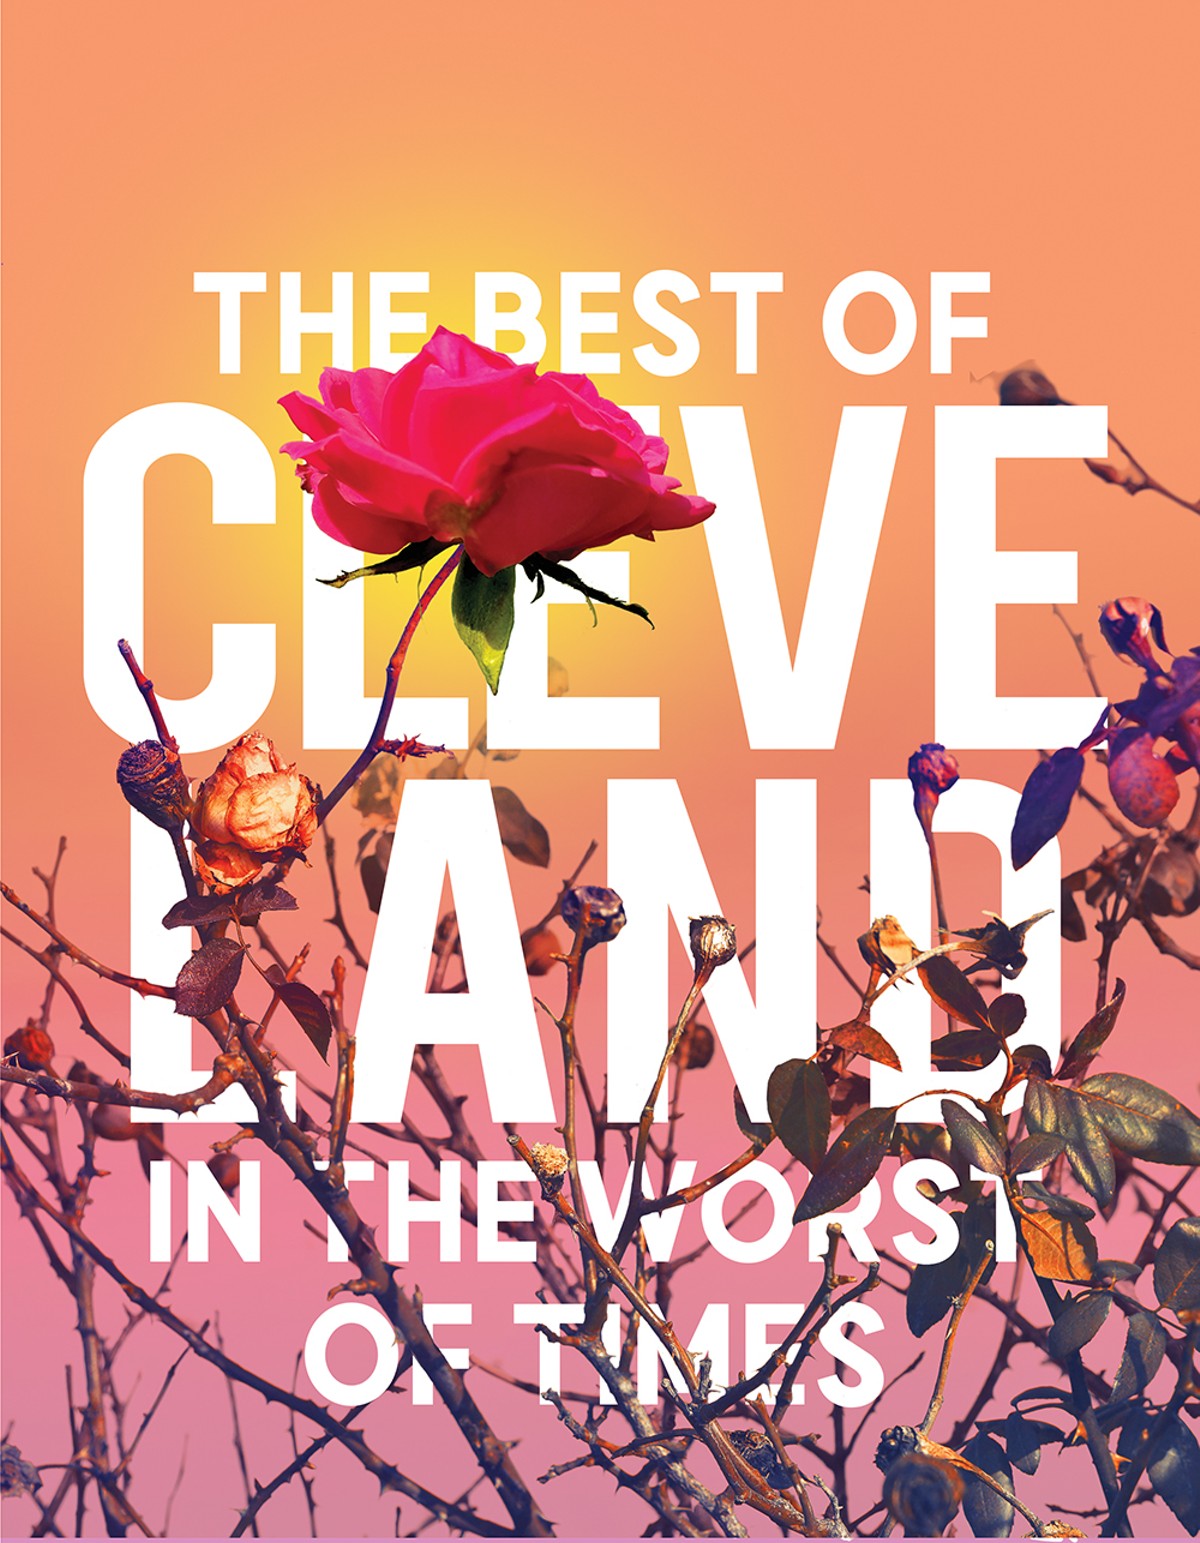 Best of Cleveland: Arts & Entertainment